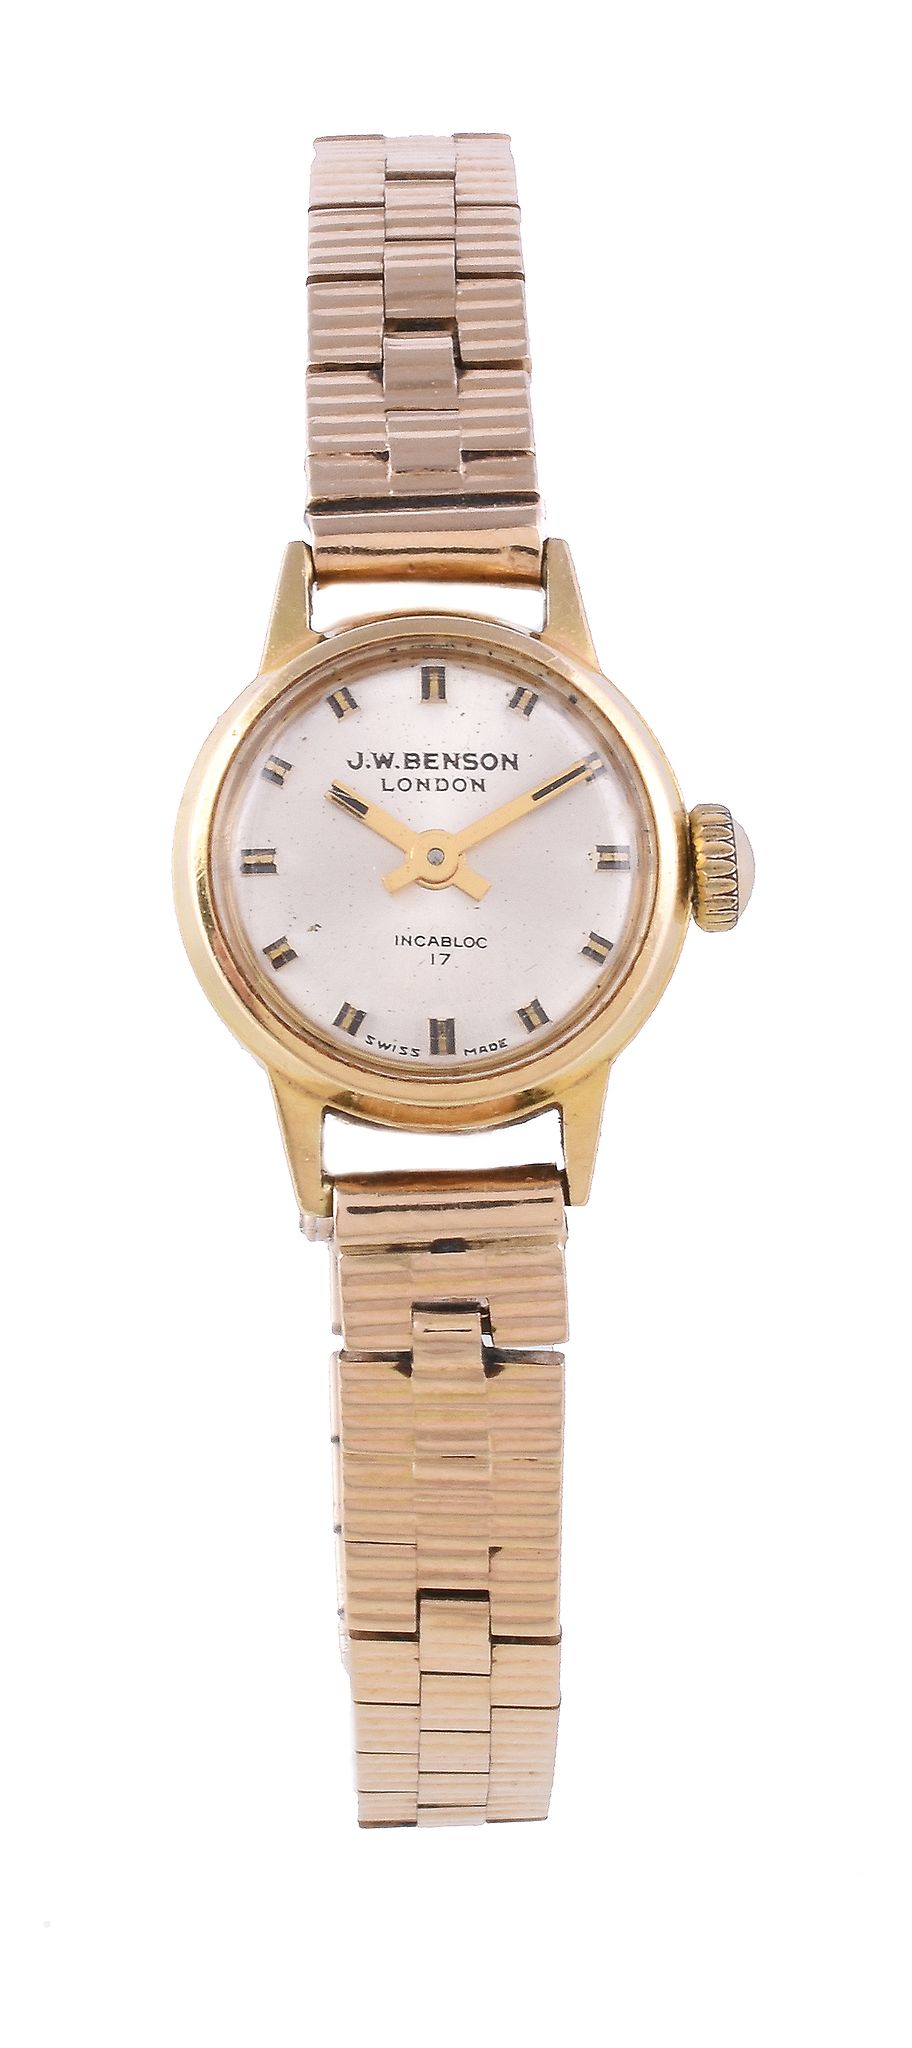 J. W. Benson, a lady's 18 carat gold wristwatch, no. 232700, import mark Edinburgh 1967, manual